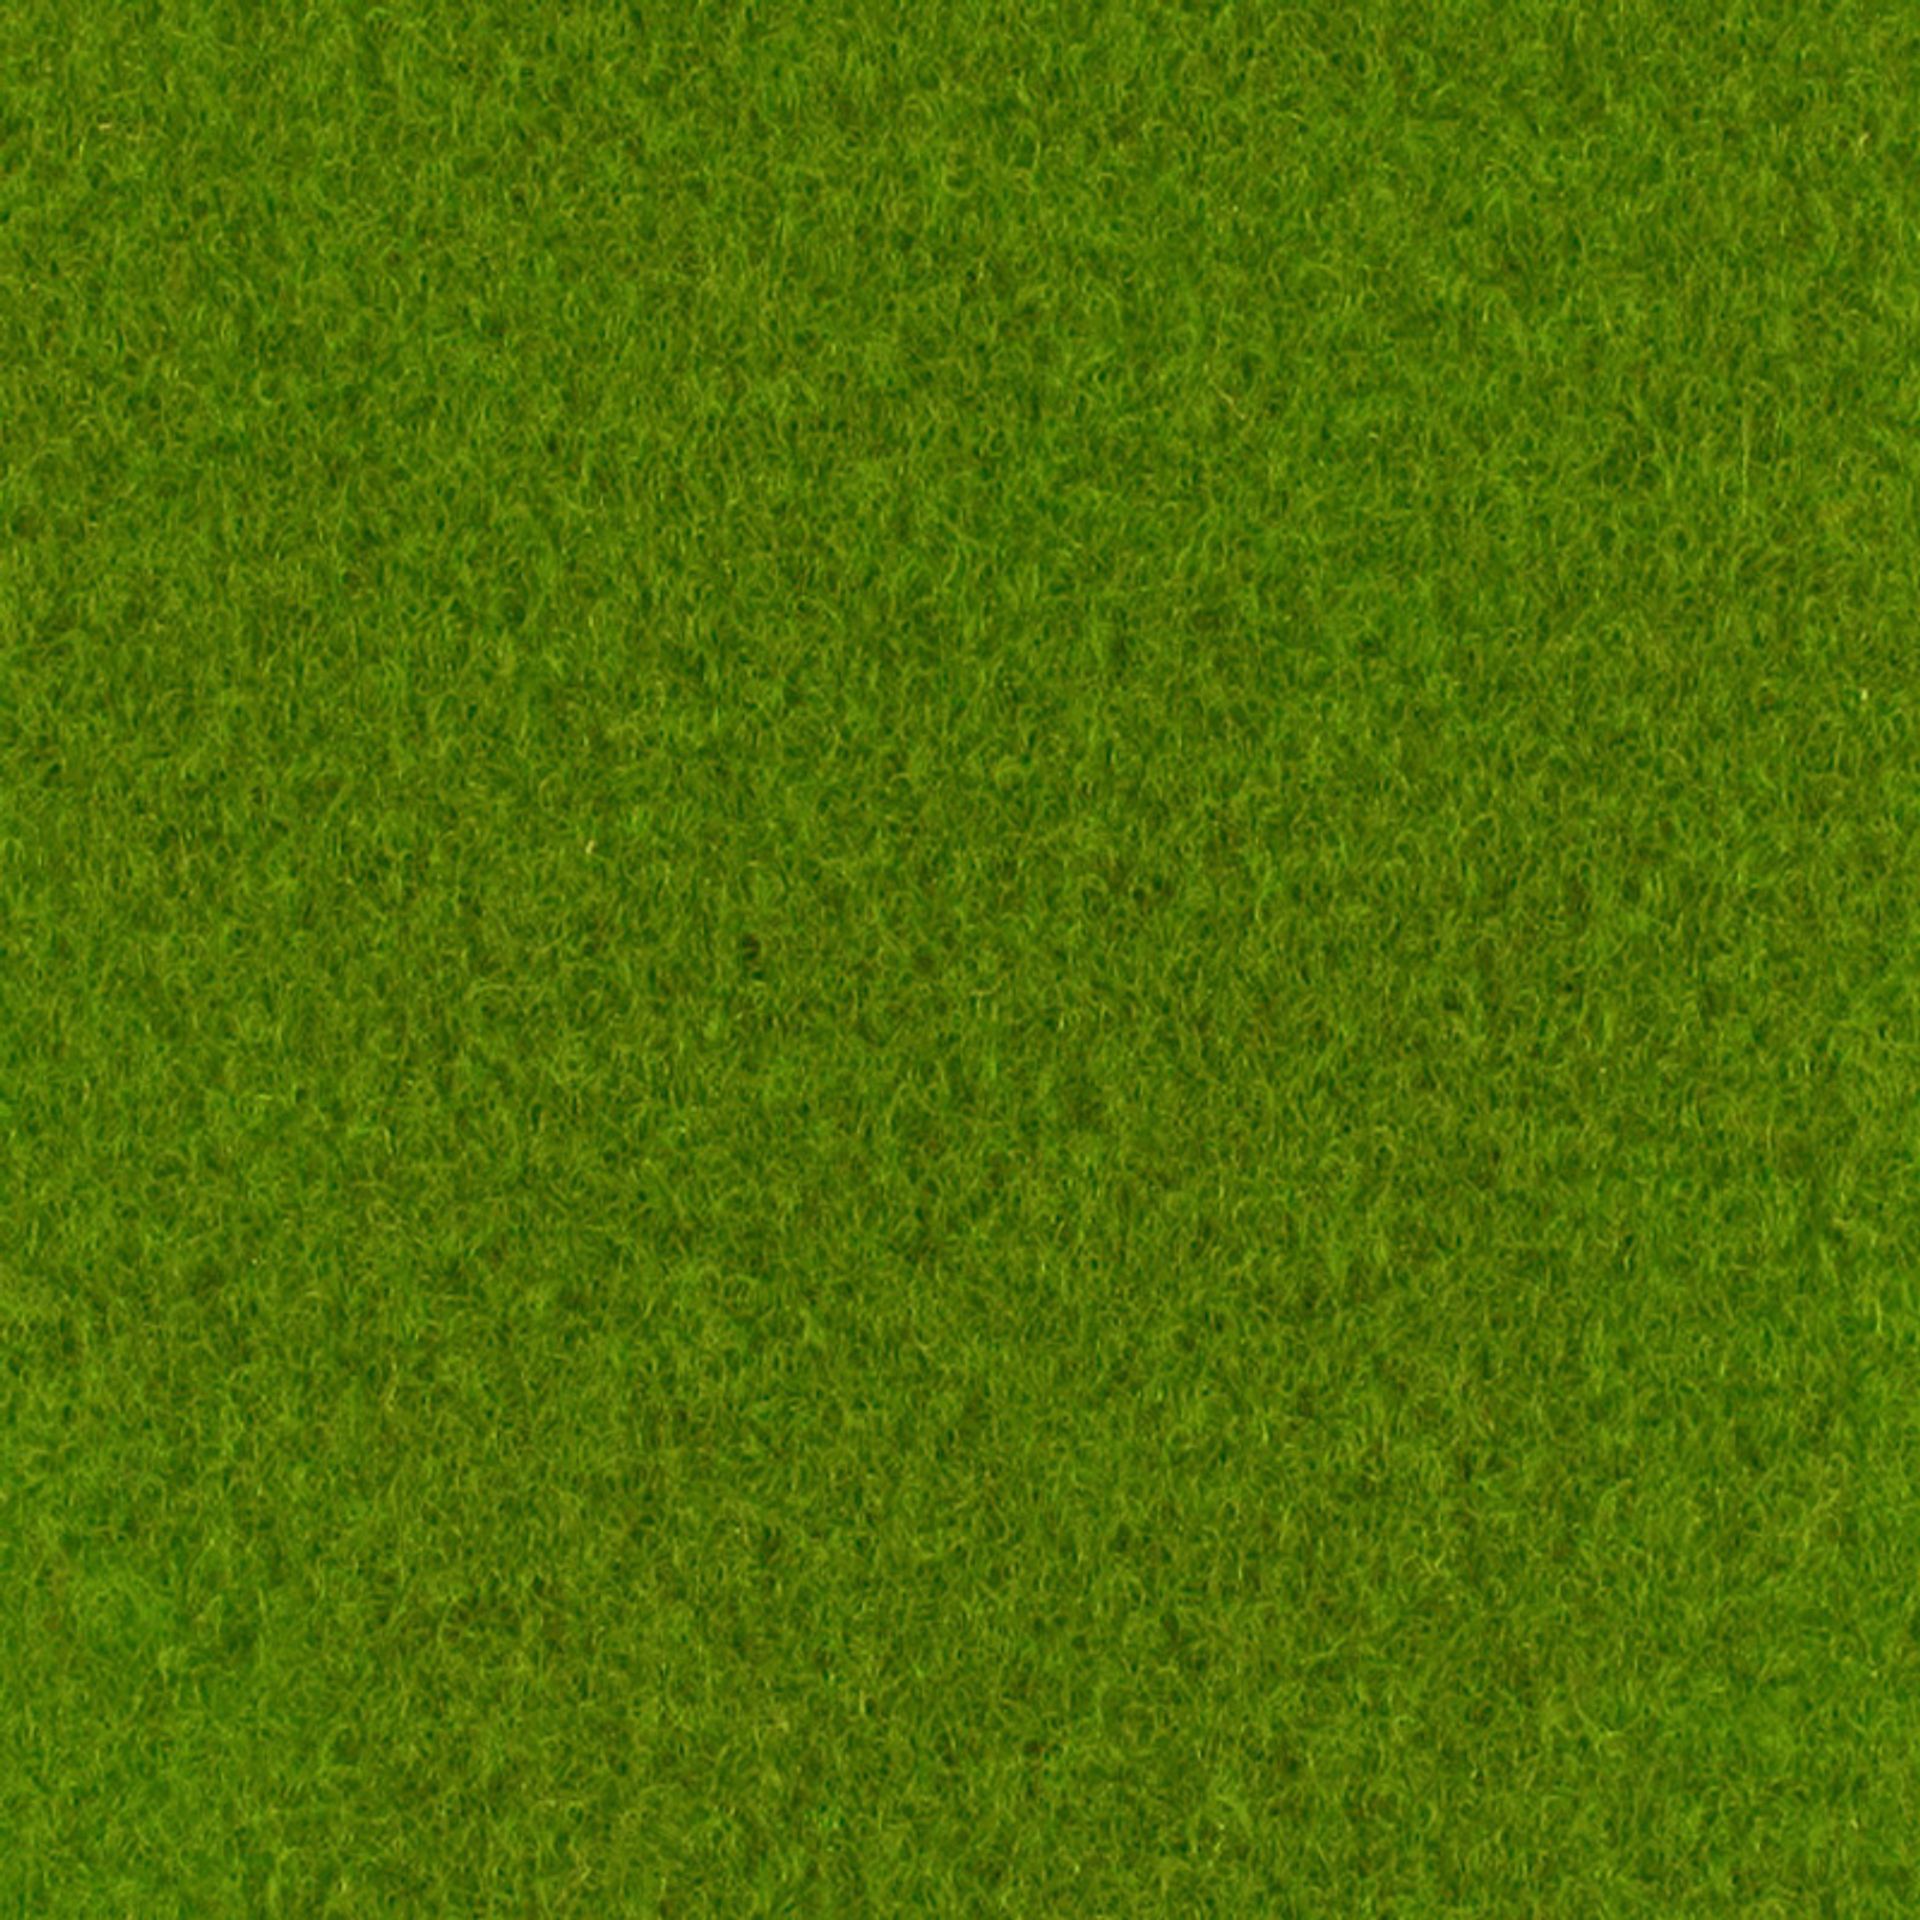 Messeboden Velours EXPOLUXE Spring Green 9631 ohne Schutzfolie - Rollenbreite 200 cm